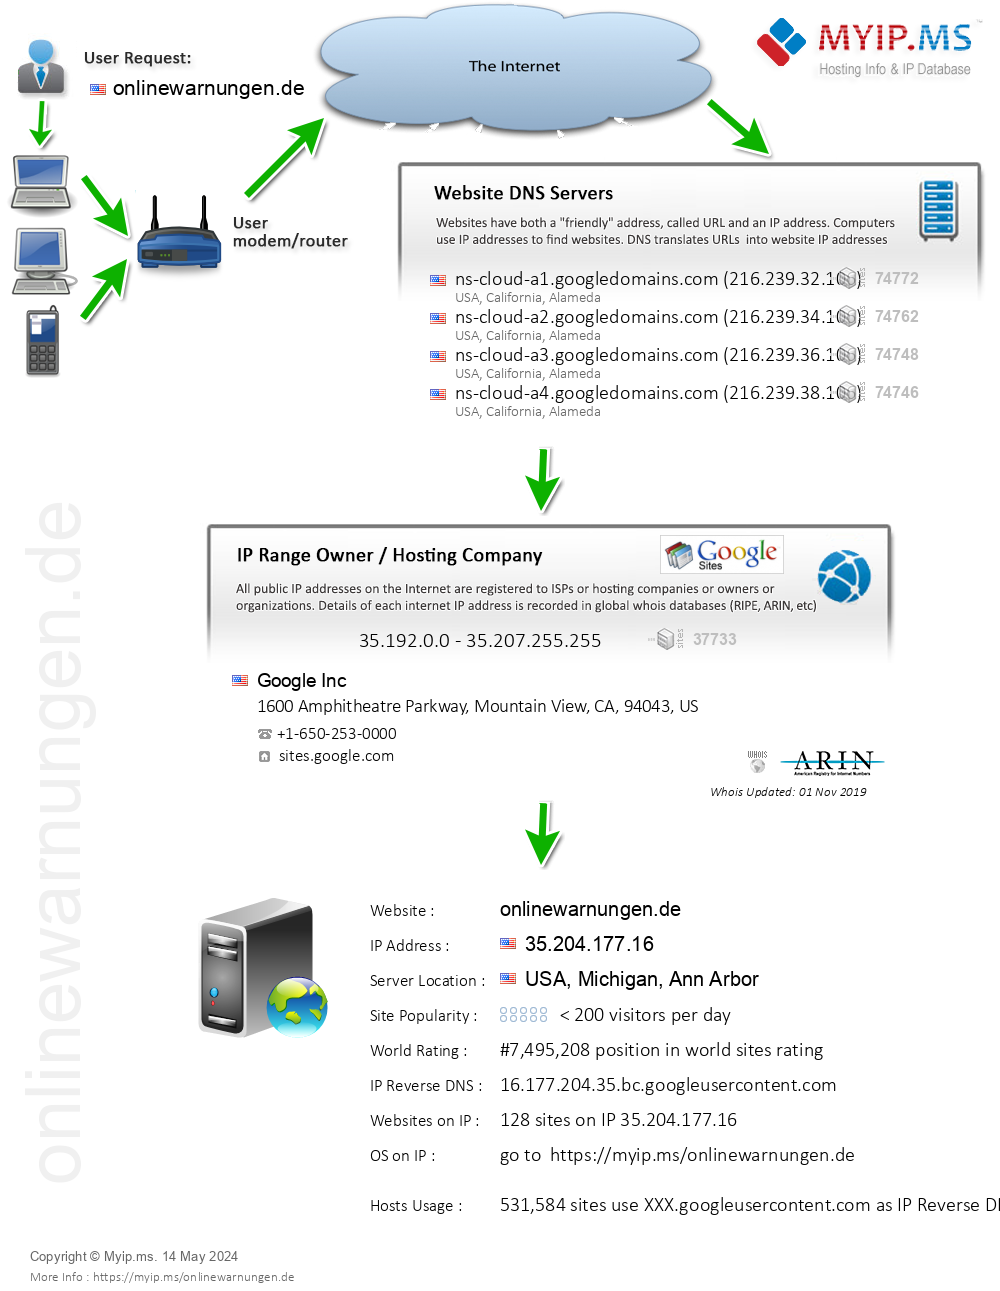 Onlinewarnungen.de - Website Hosting Visual IP Diagram